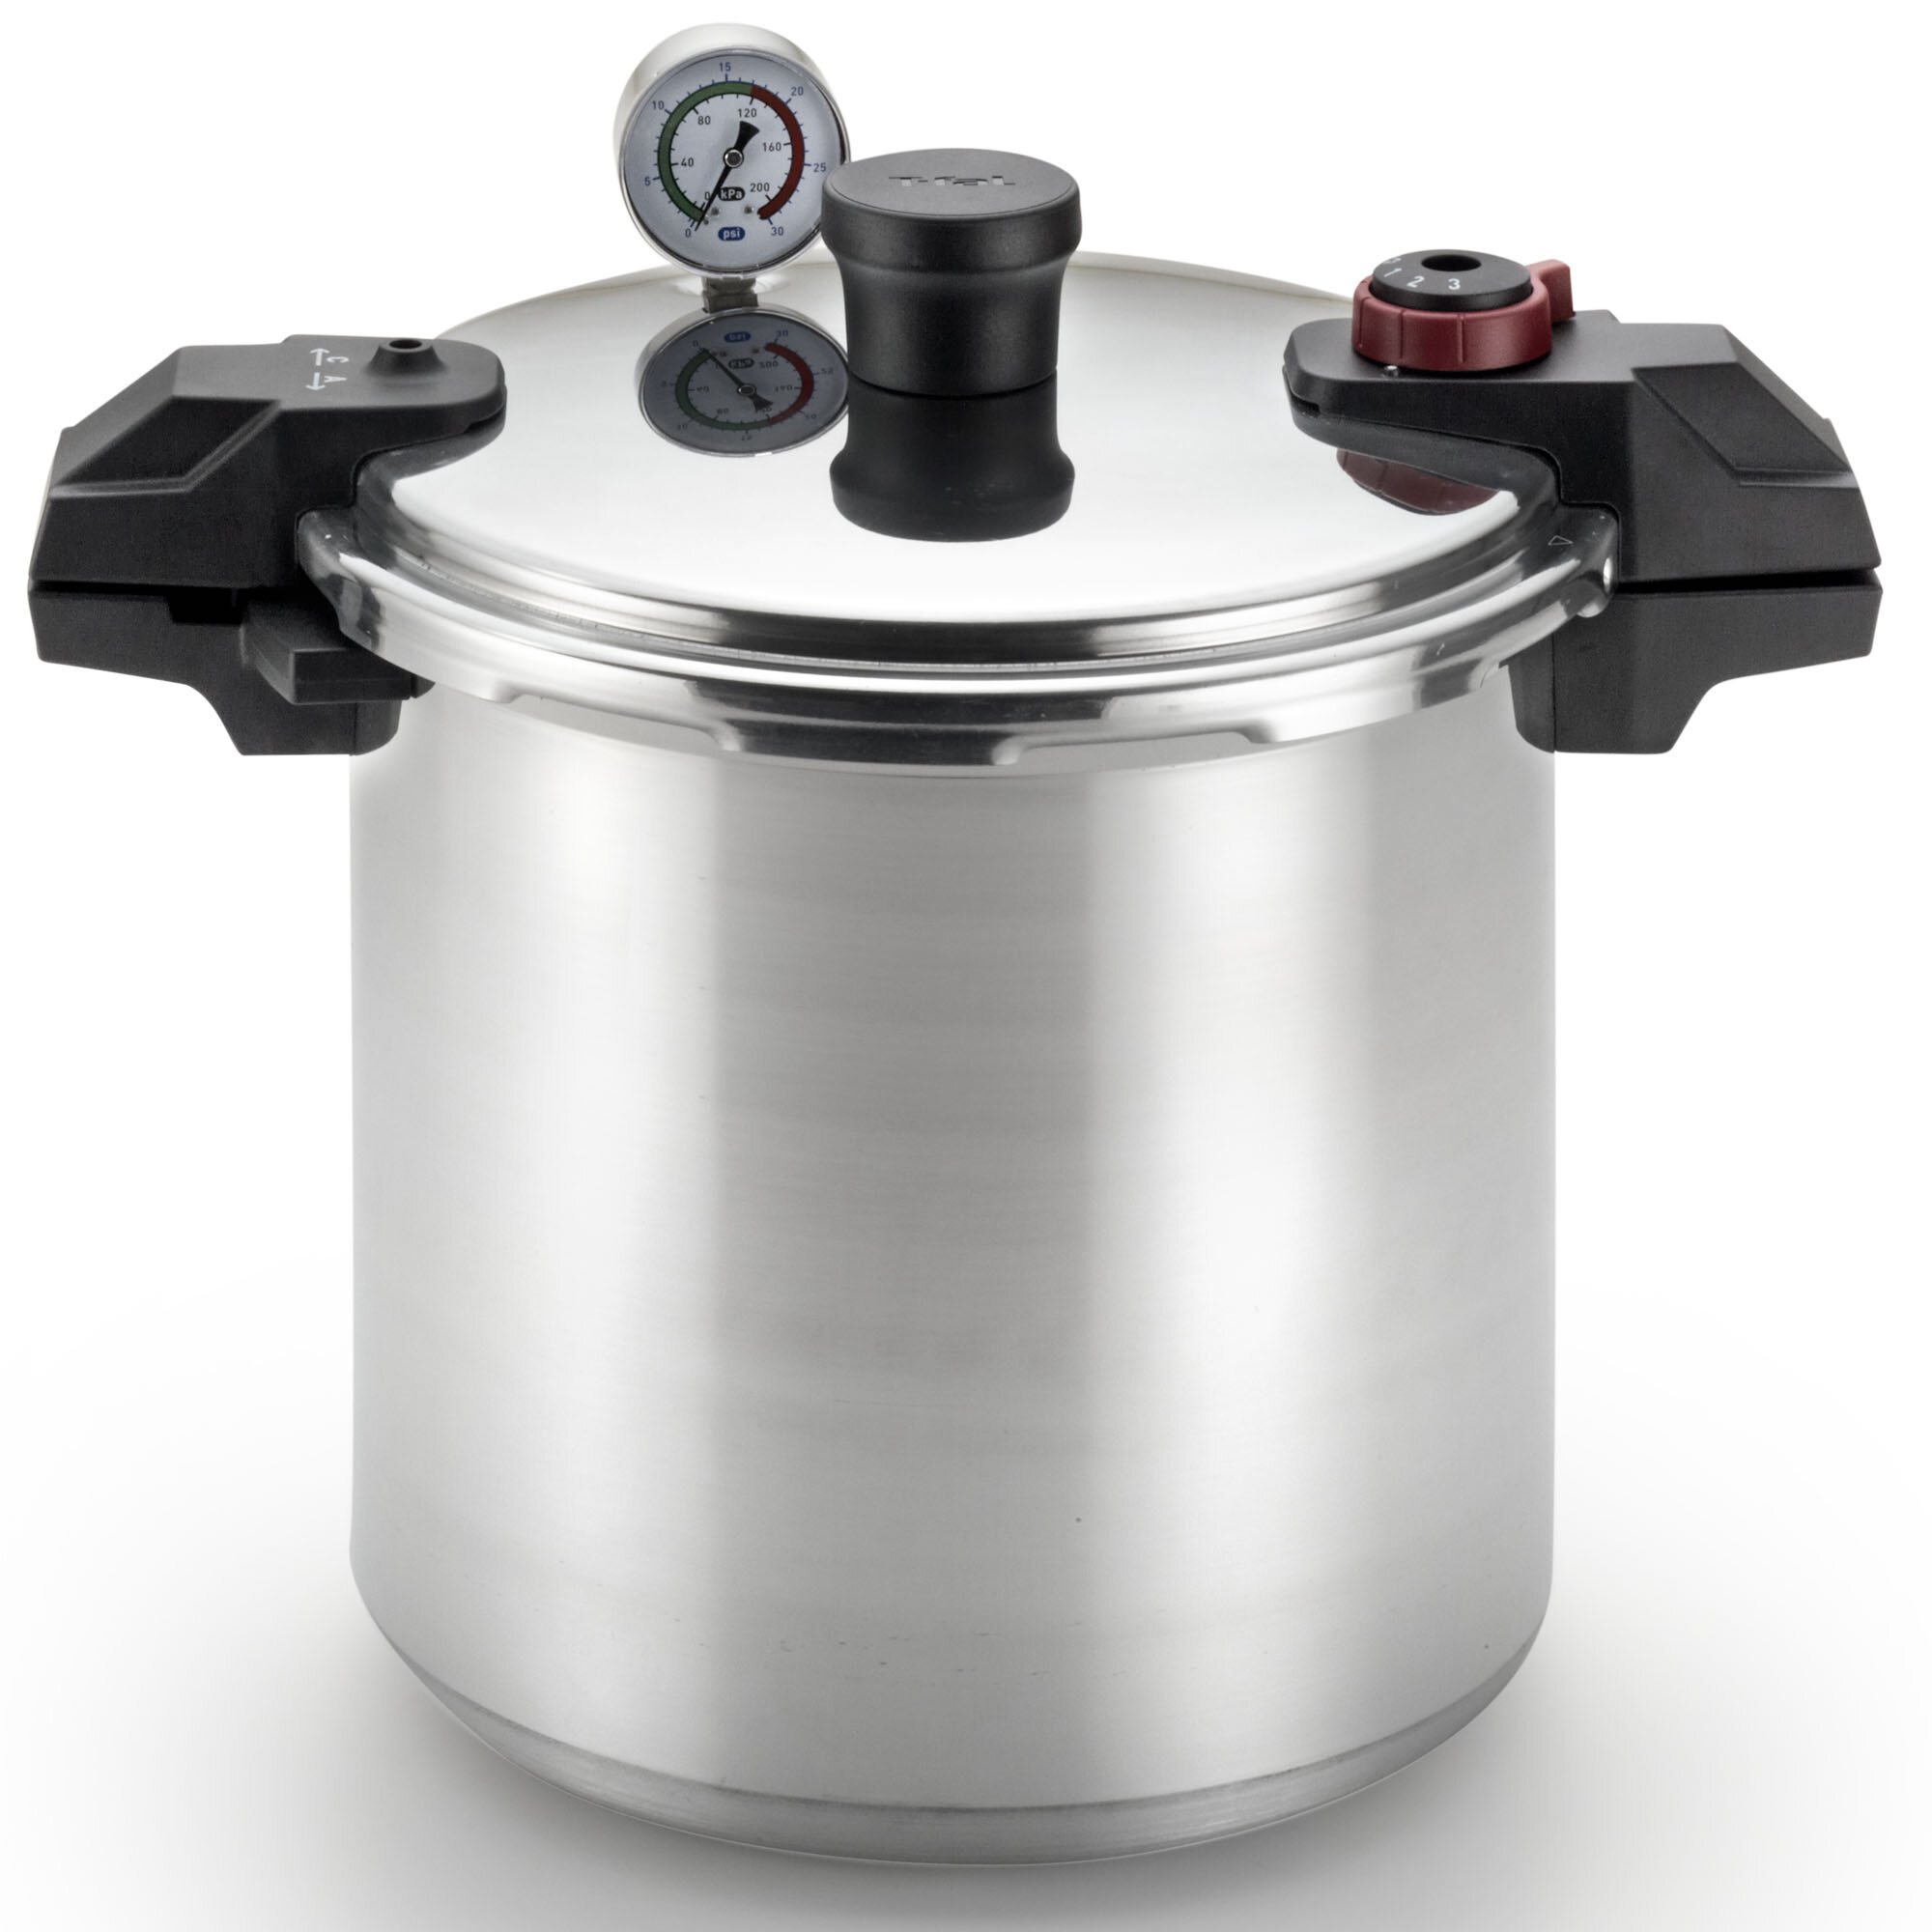 Barton 22 qt. Aluminum Stovetop Pressure Cooker with Built-in Pressure Dial Gauge